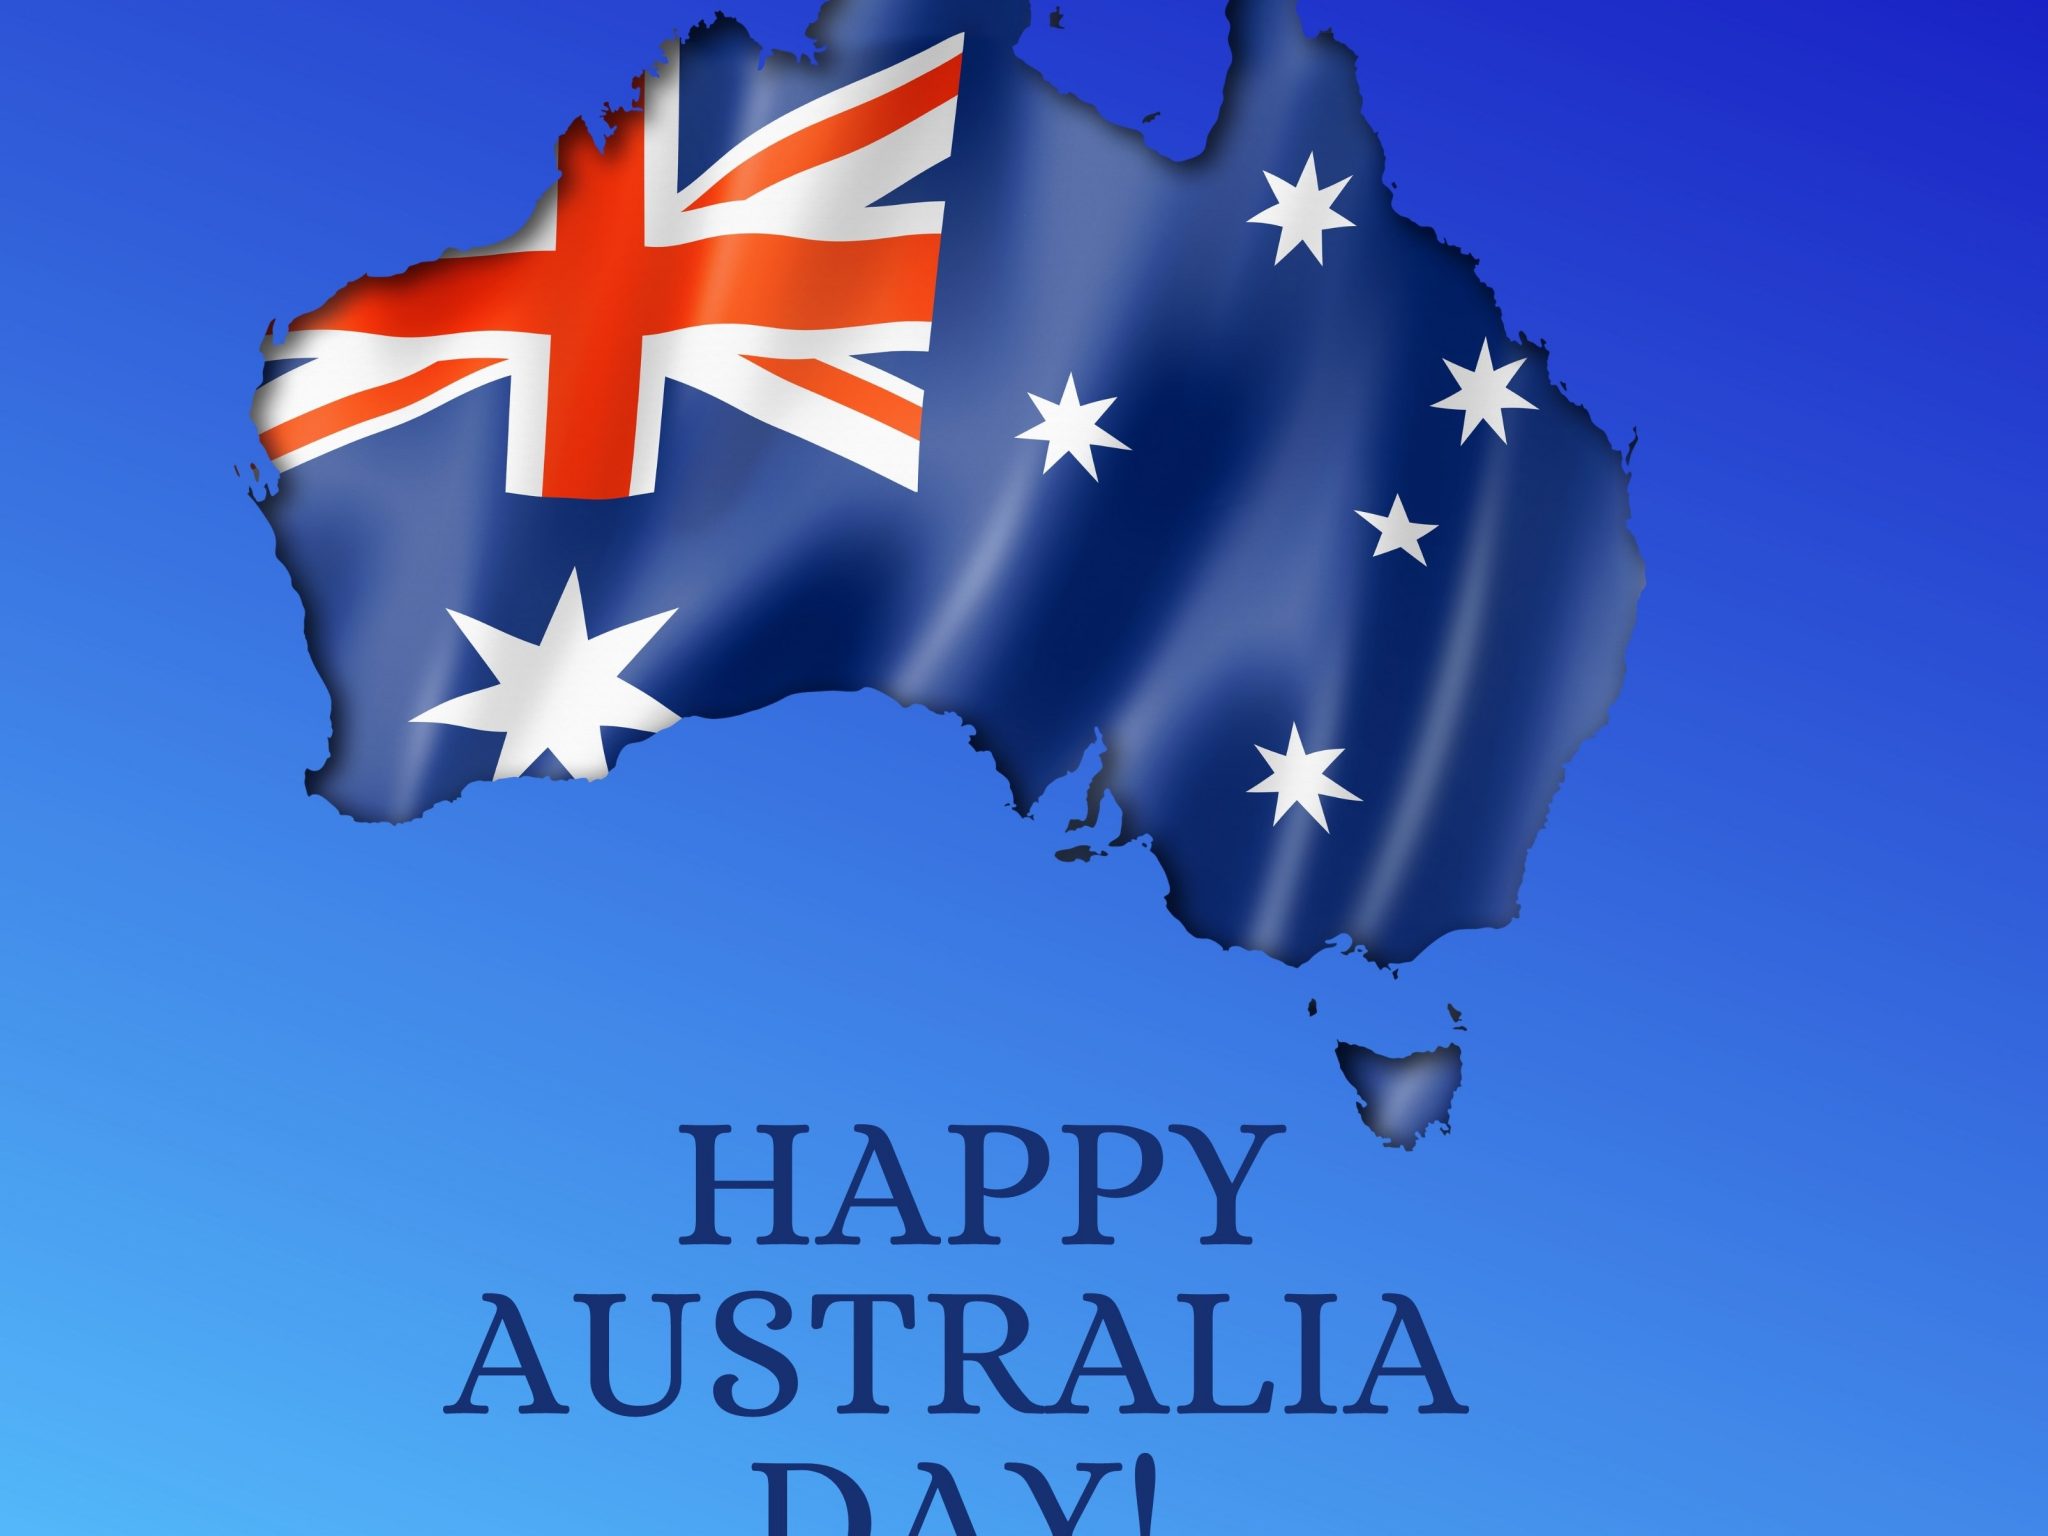 2048x1536 wallpaper Happy Australia Day iPad Wallpaper 2048x1536 pixels resolution